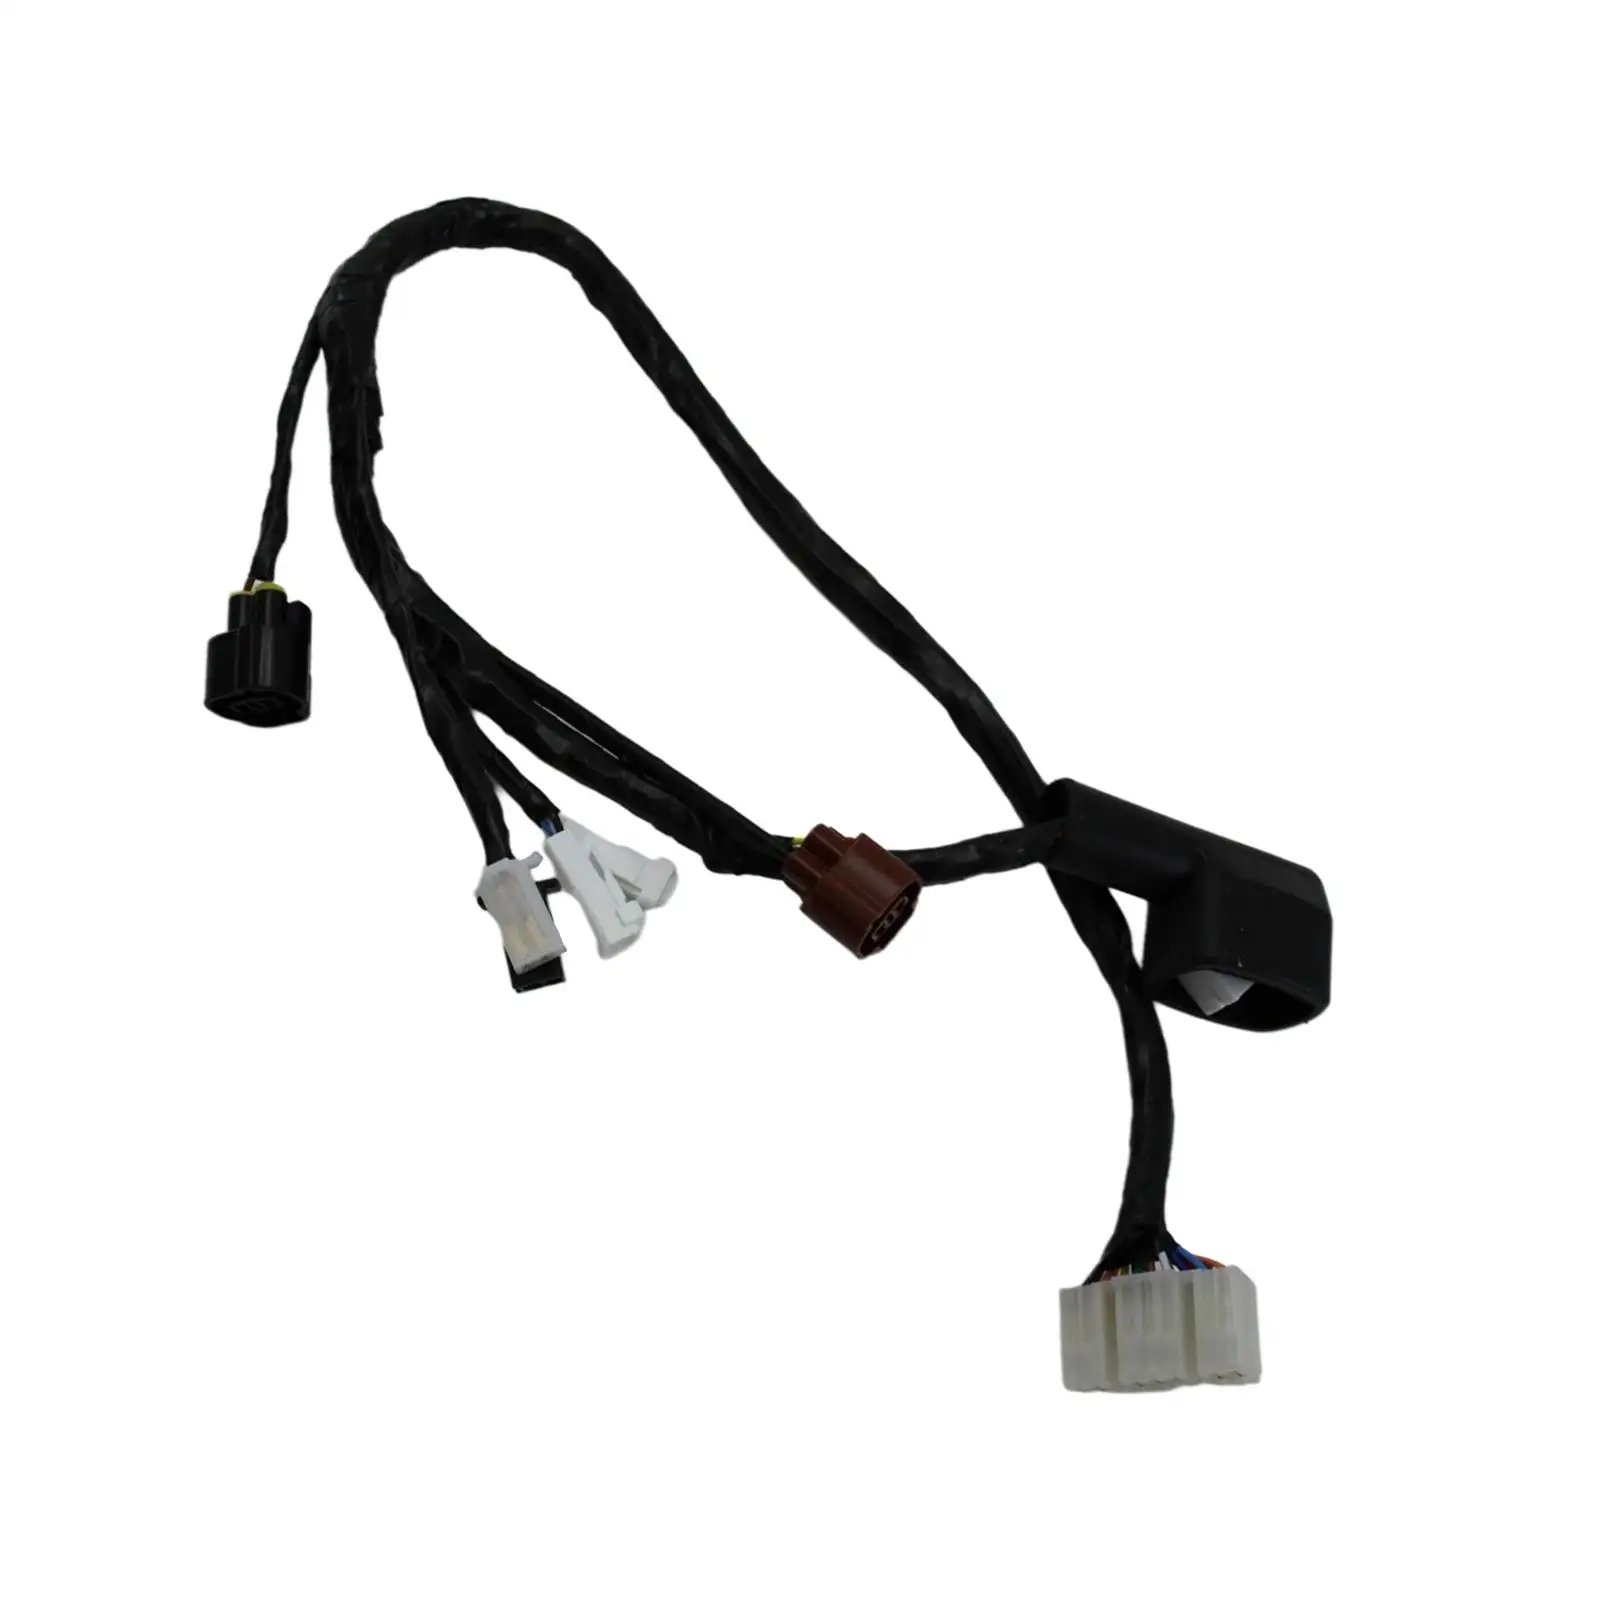 Headlight Wire Harness Set fits for Suzuki GSXR 1000 05-06 36620-41G00, High Quality Spare Parts